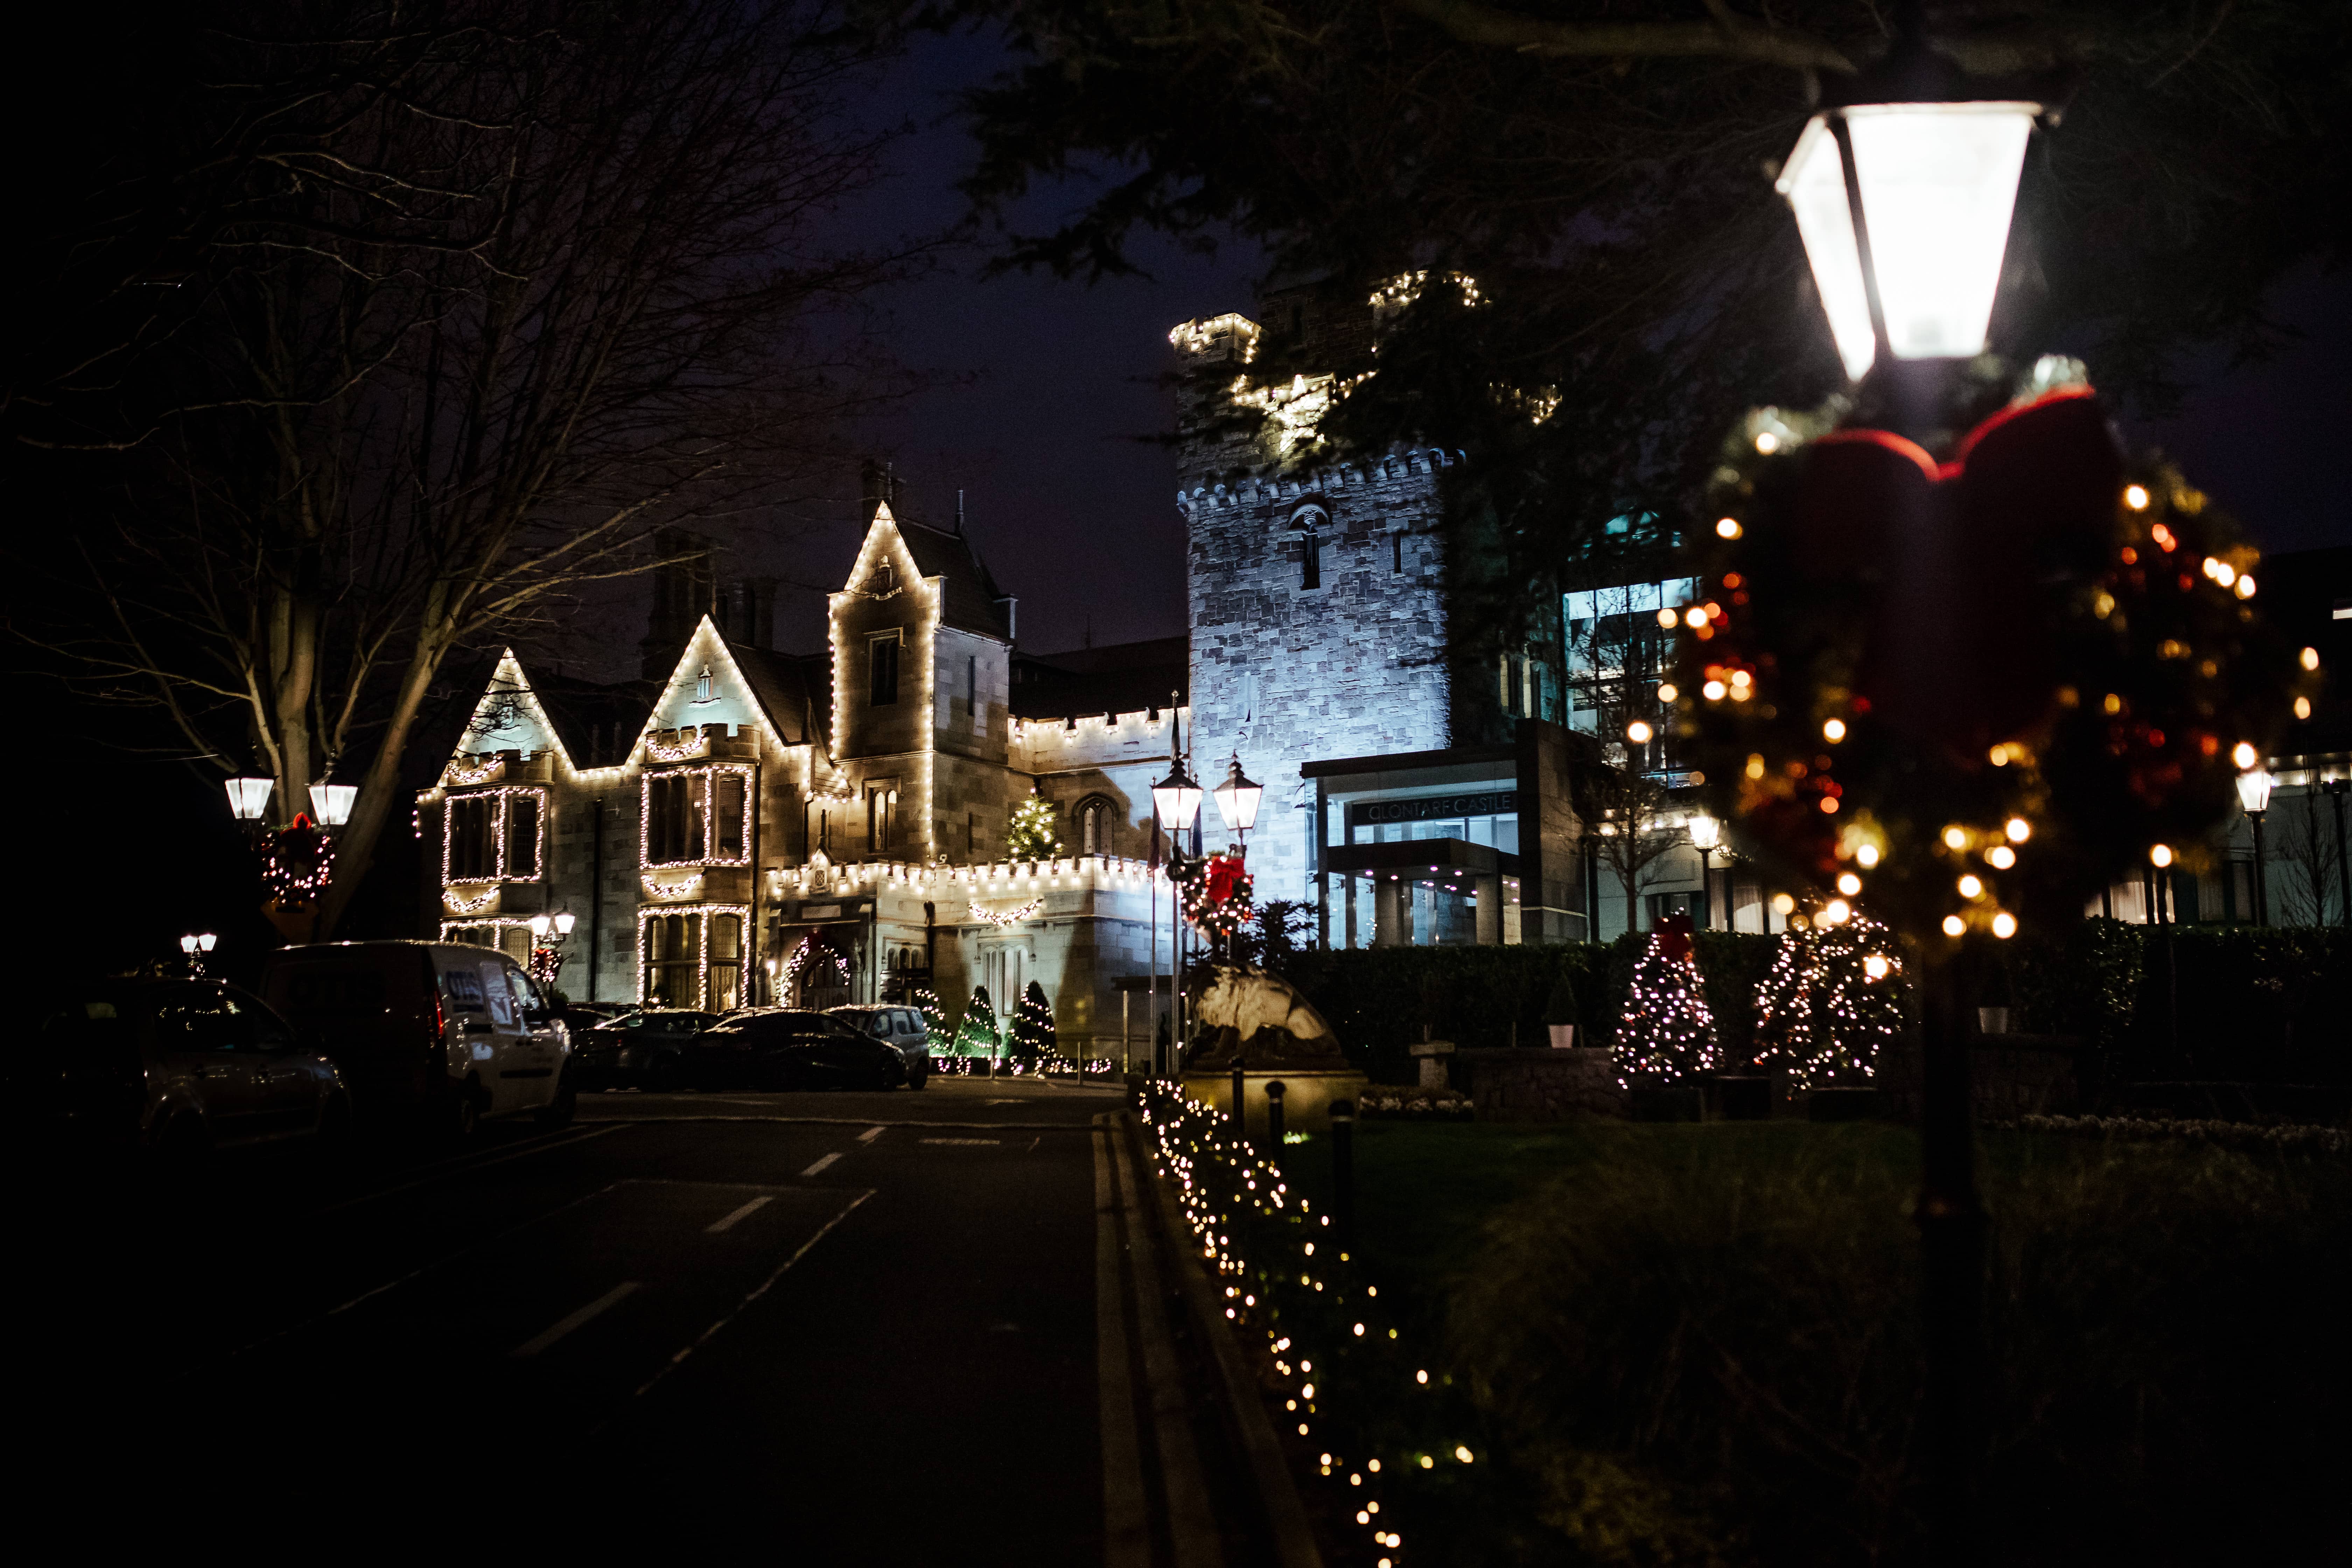 clontarf castle hotel at night christmas lights winter wedding